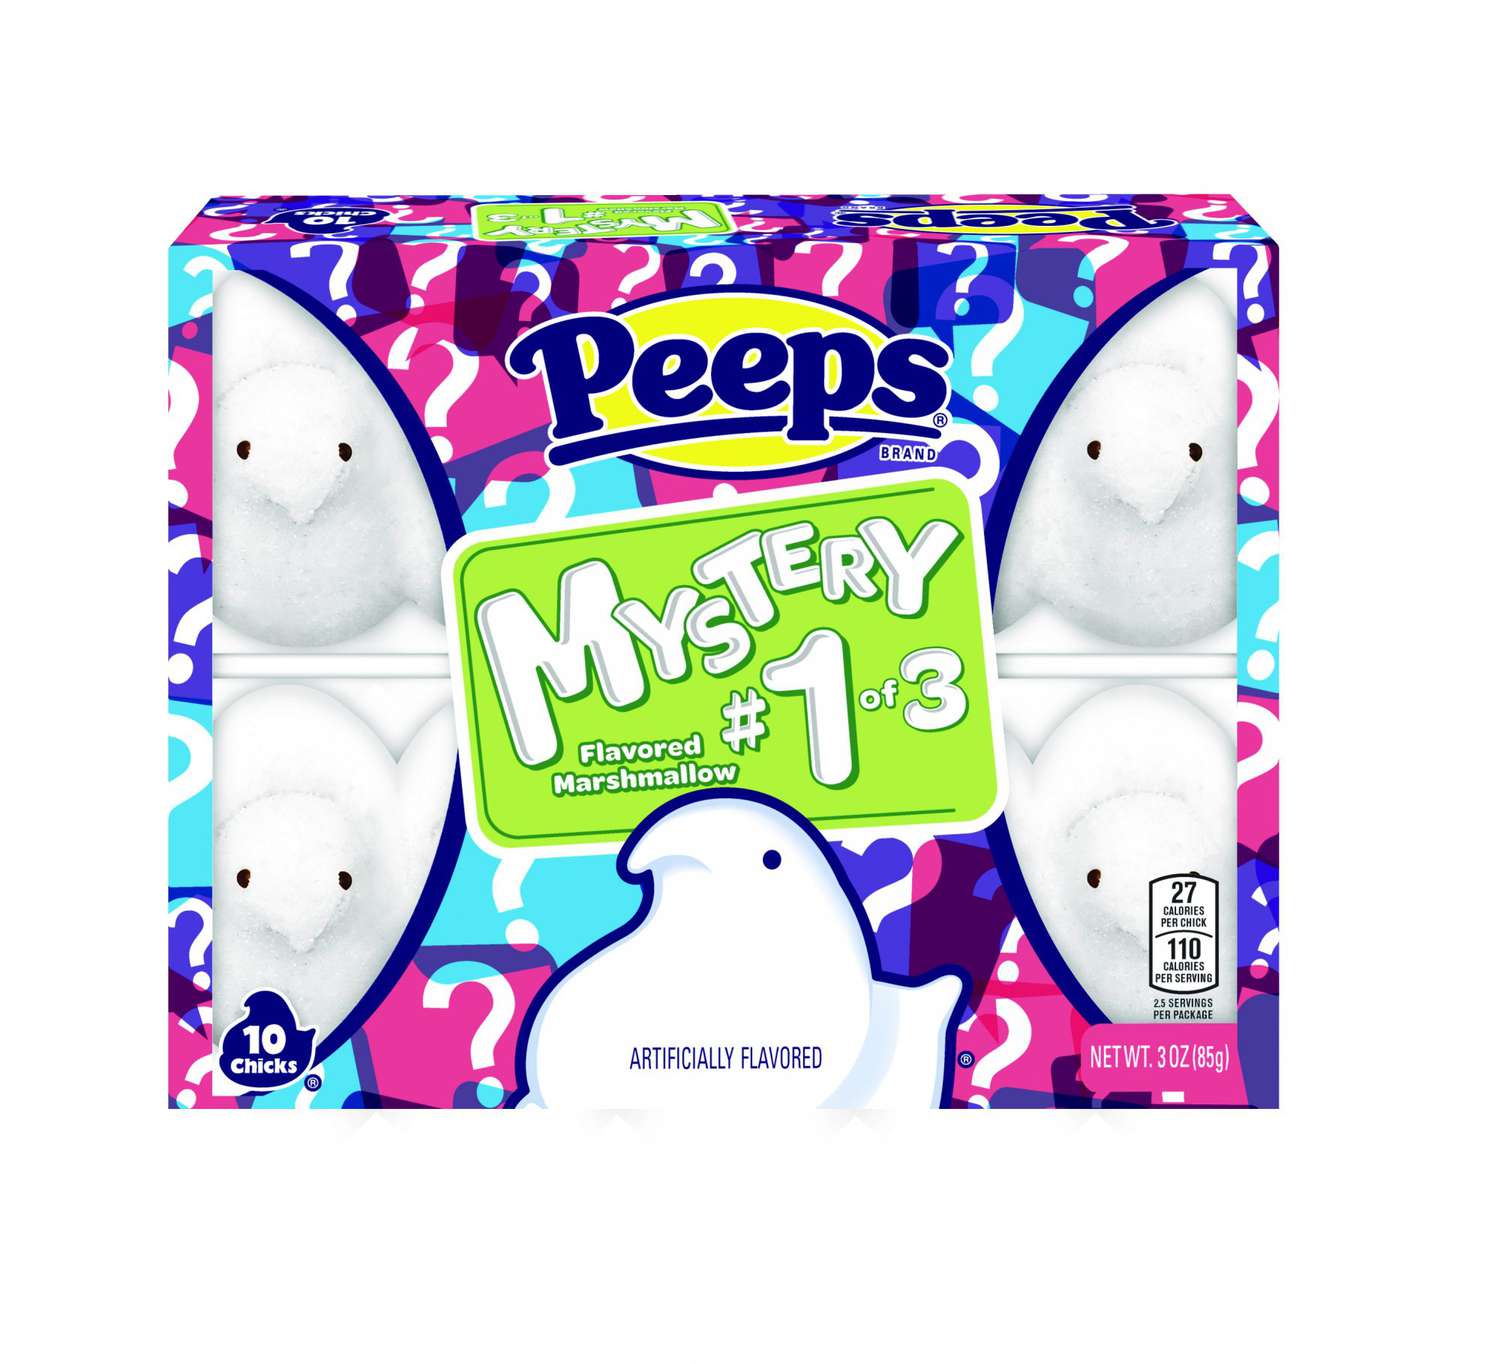 New Peeps mystery flavors